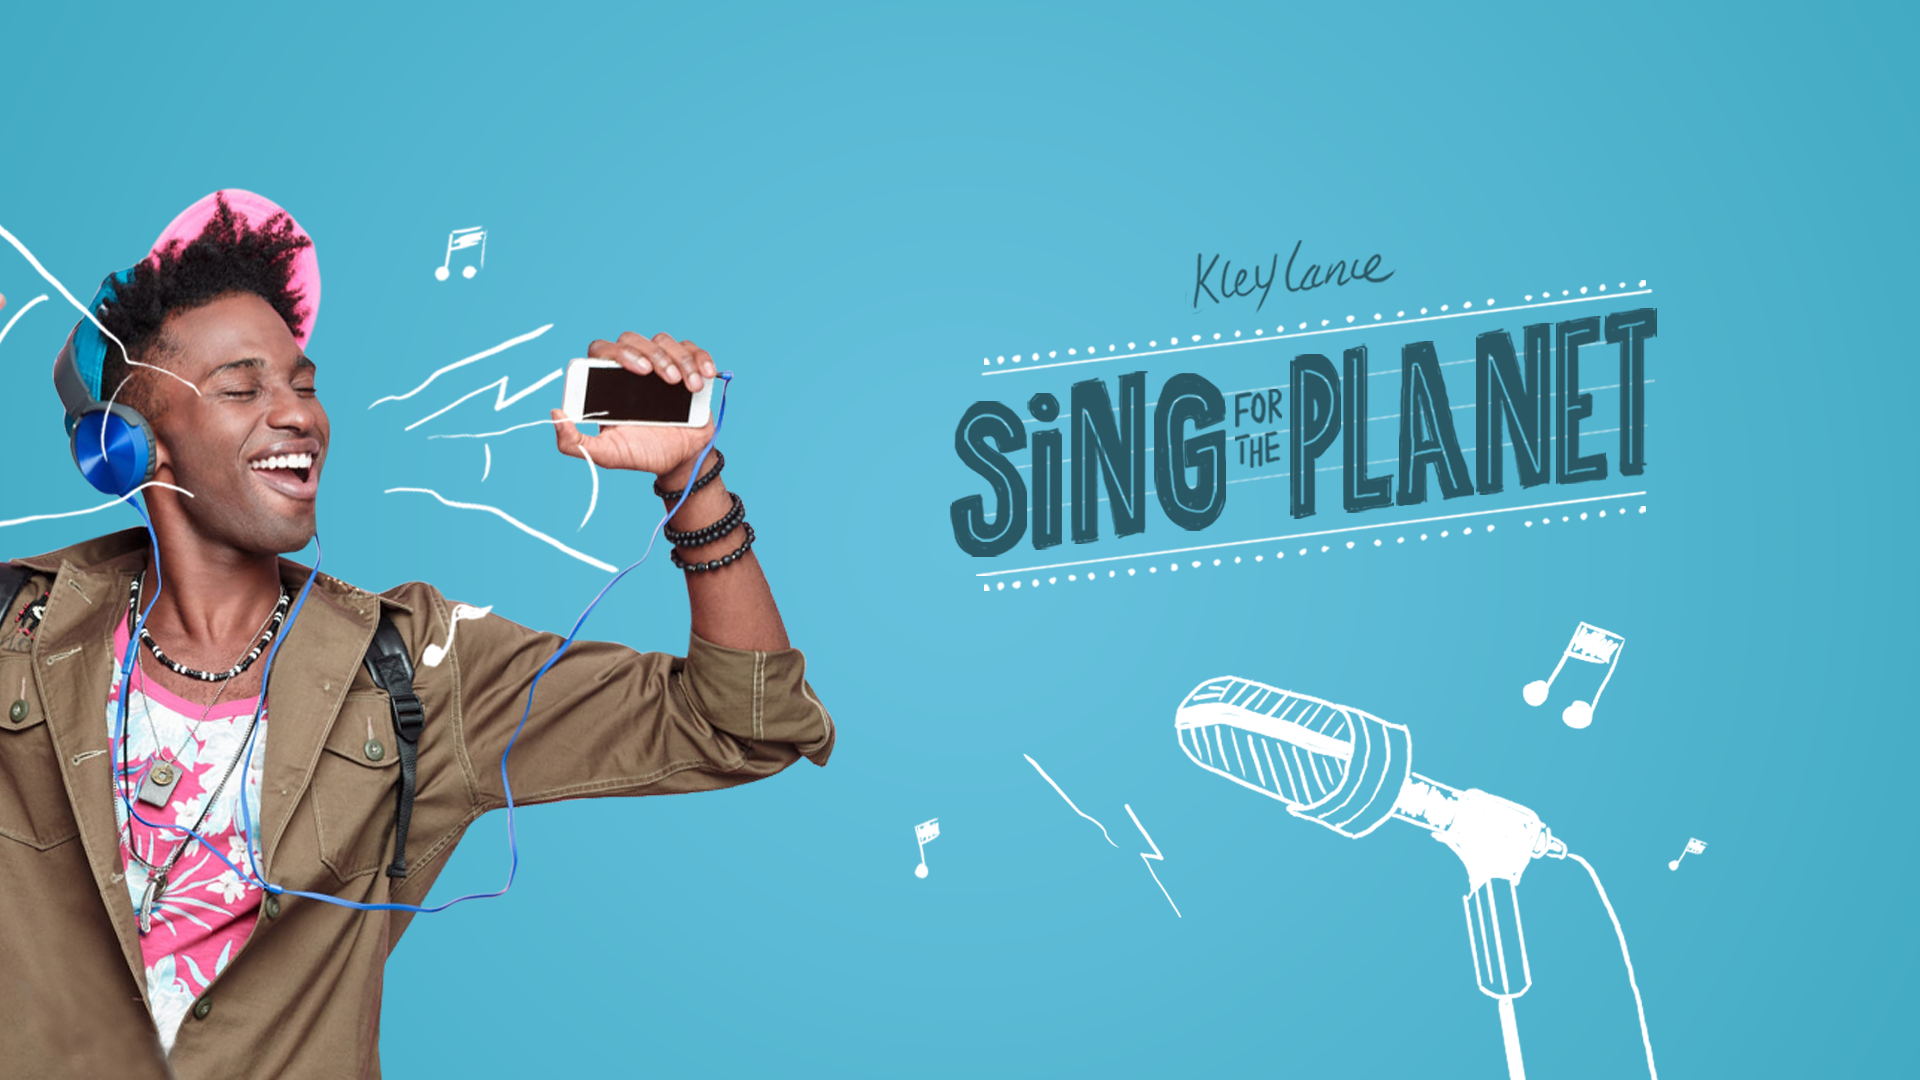 Participe au projet Sing for the planet !